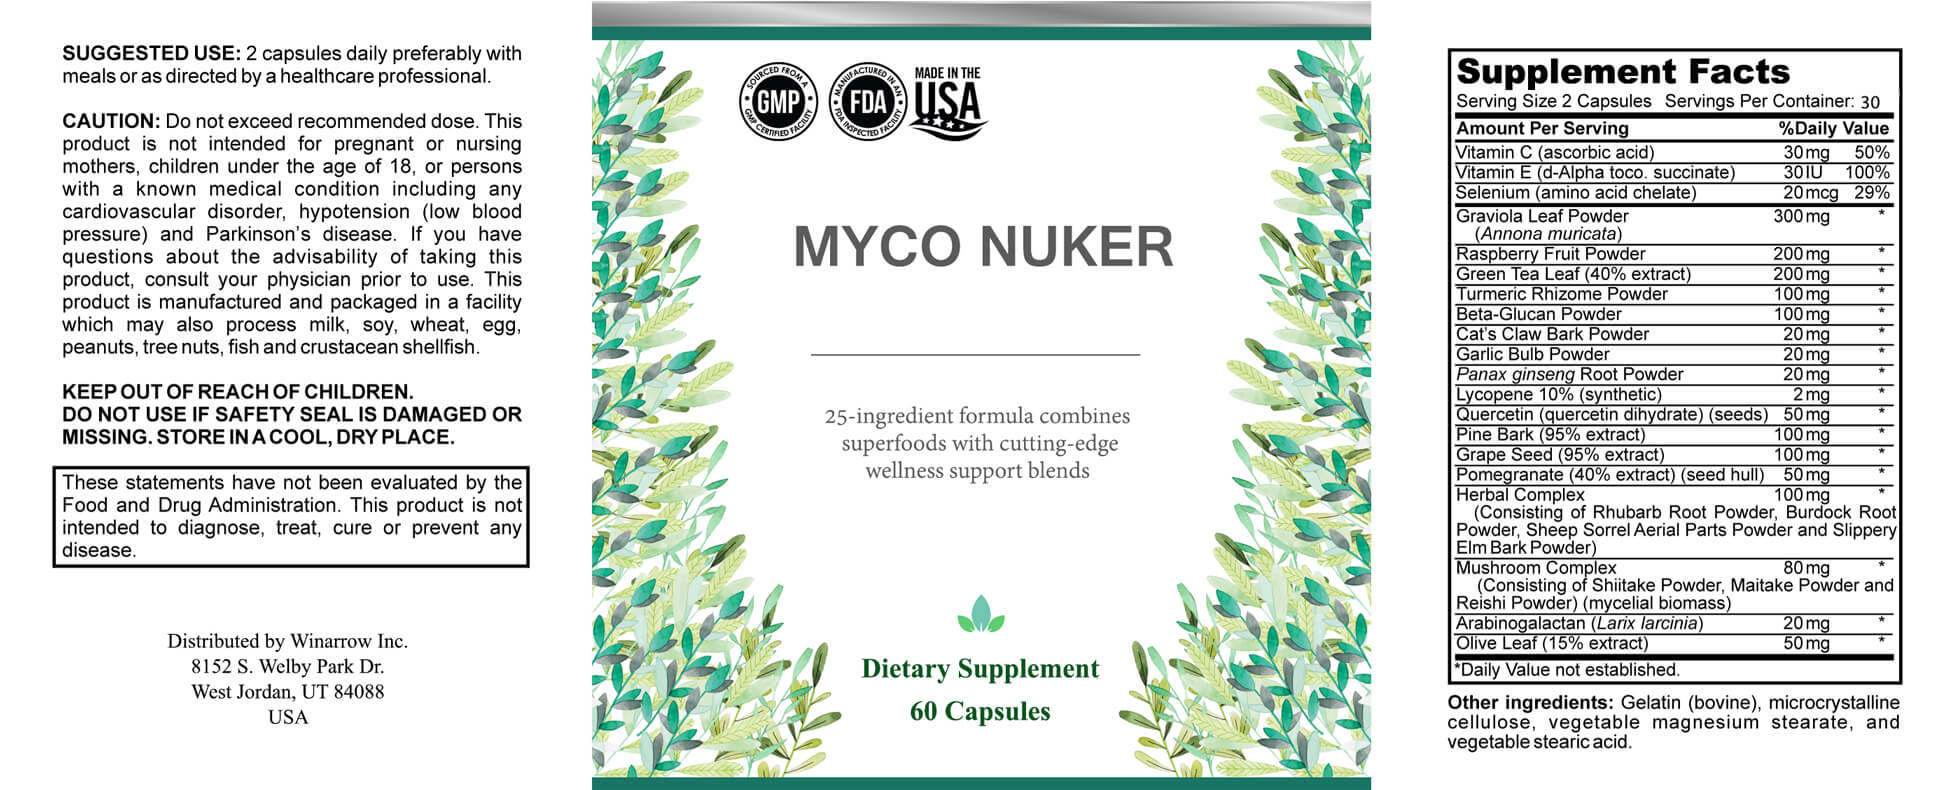 myco-nuker label